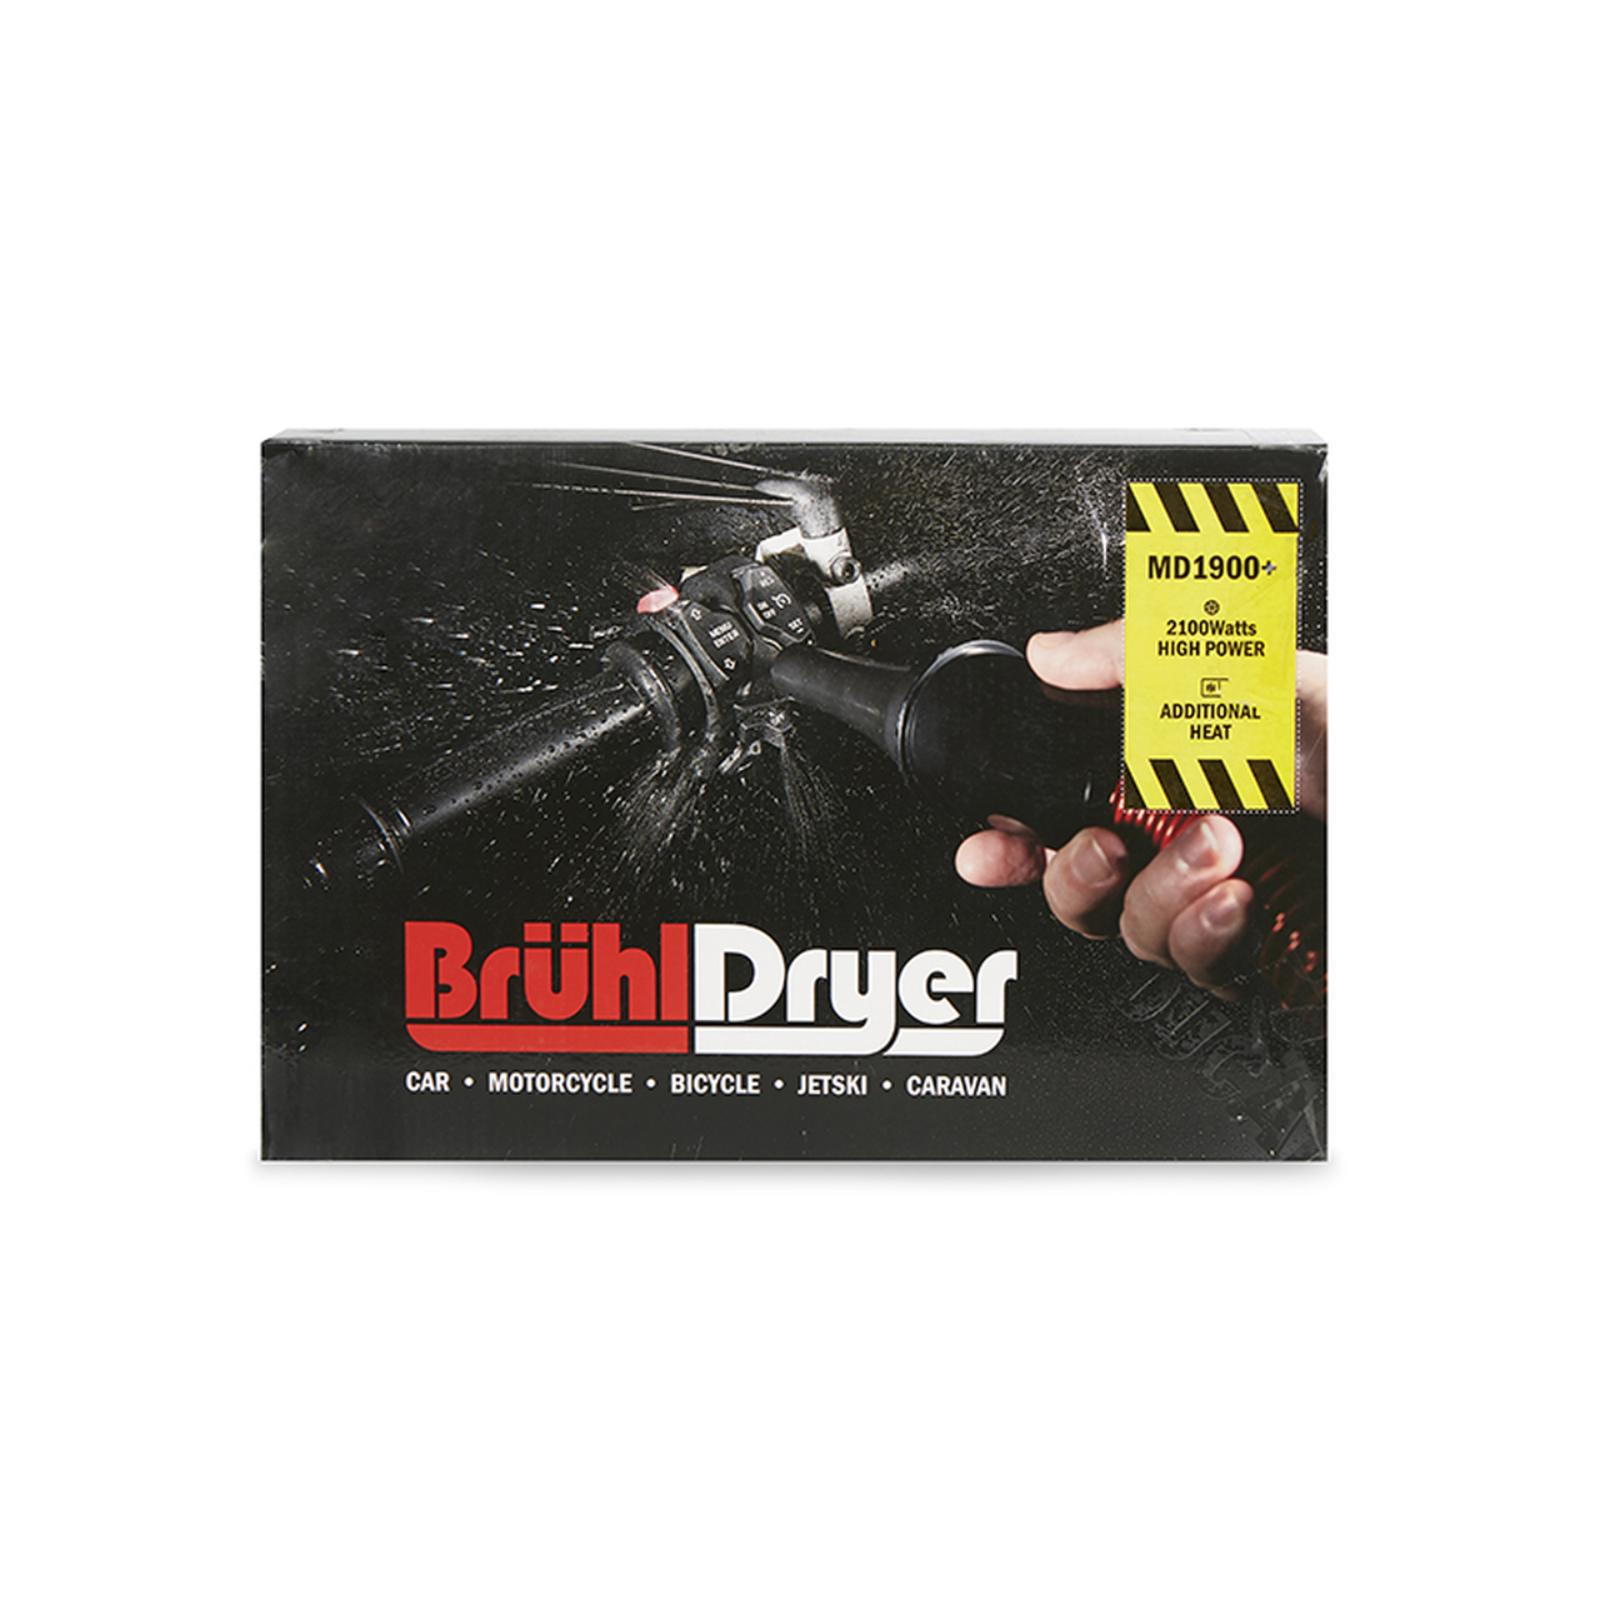 Bruhl MD1900+ Single Turbine Dryer box